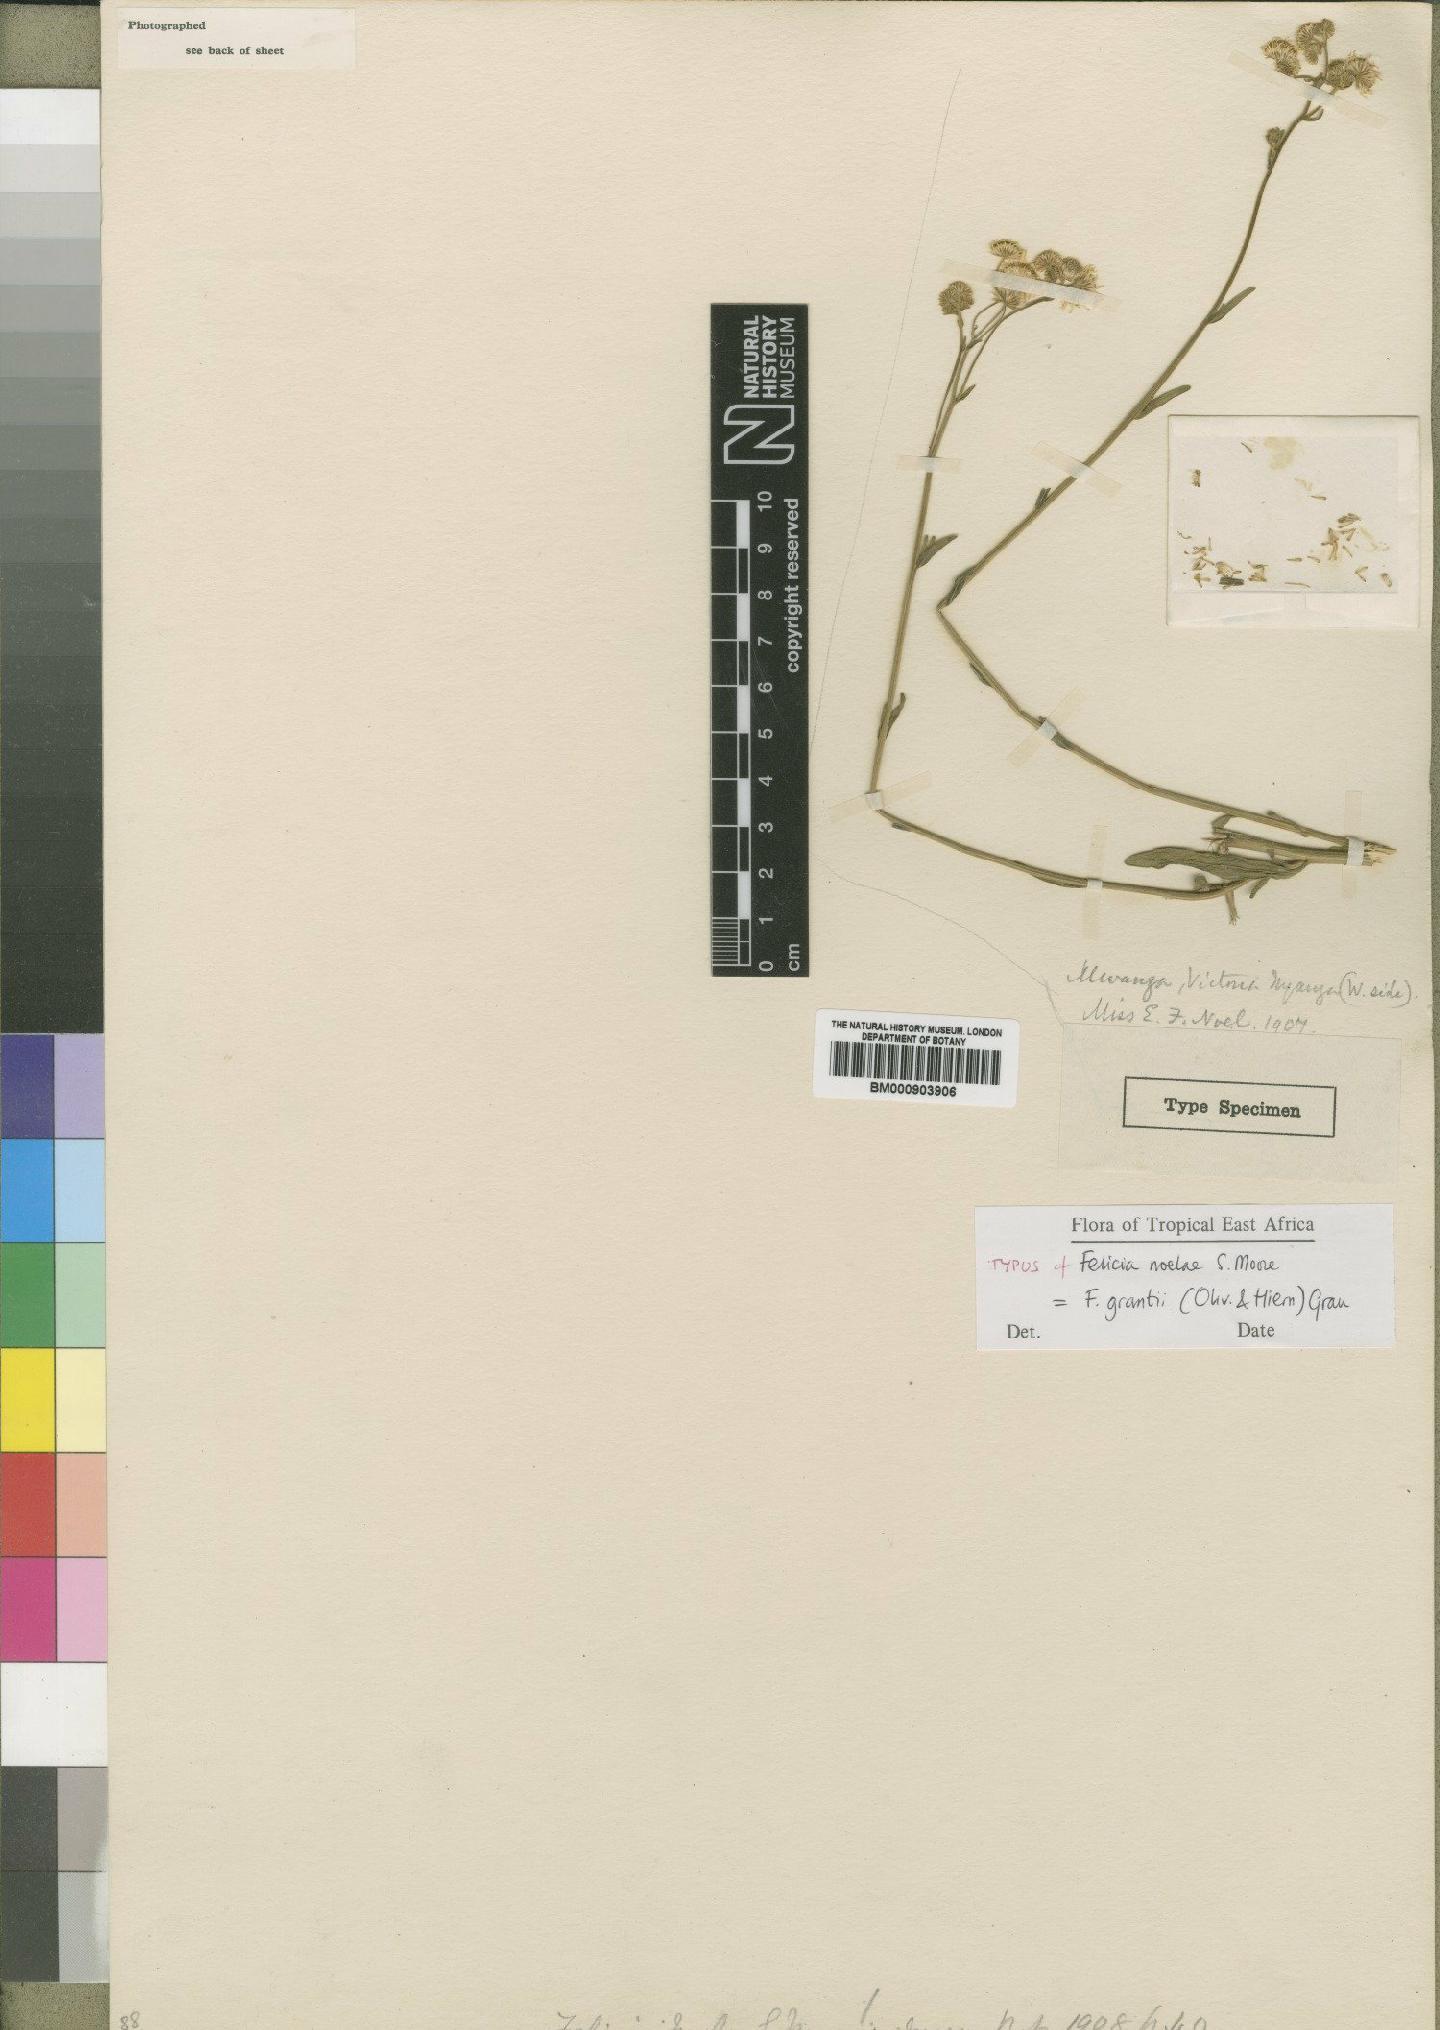 To NHMUK collection (Felicia grantii (Oliv. & Hiern) Grau; Type; NHMUK:ecatalogue:4528955)